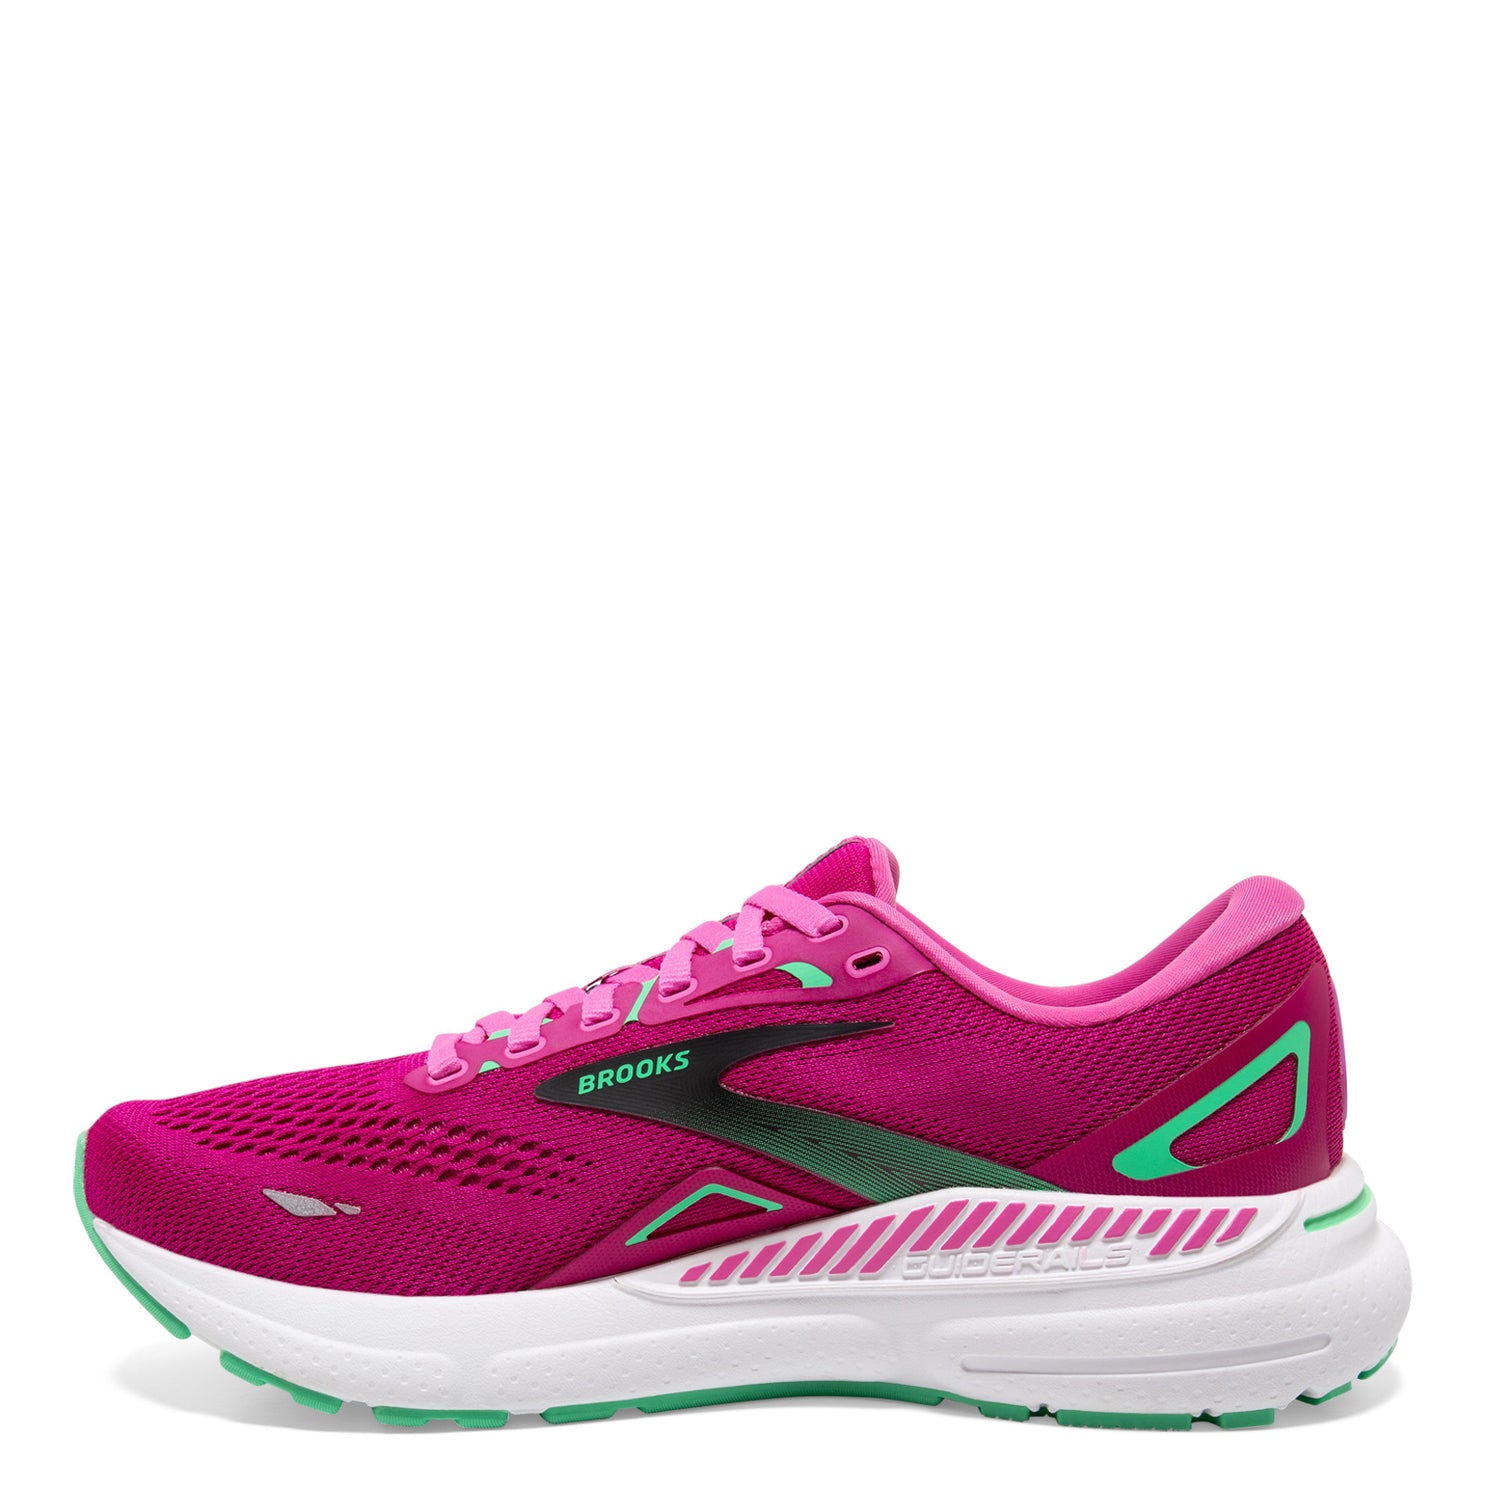 Peltz Shoes  Women's Brooks Adrenaline GTS 23 Running Shoe Pink/Festival Fuchsia/Black 120381 1B 639